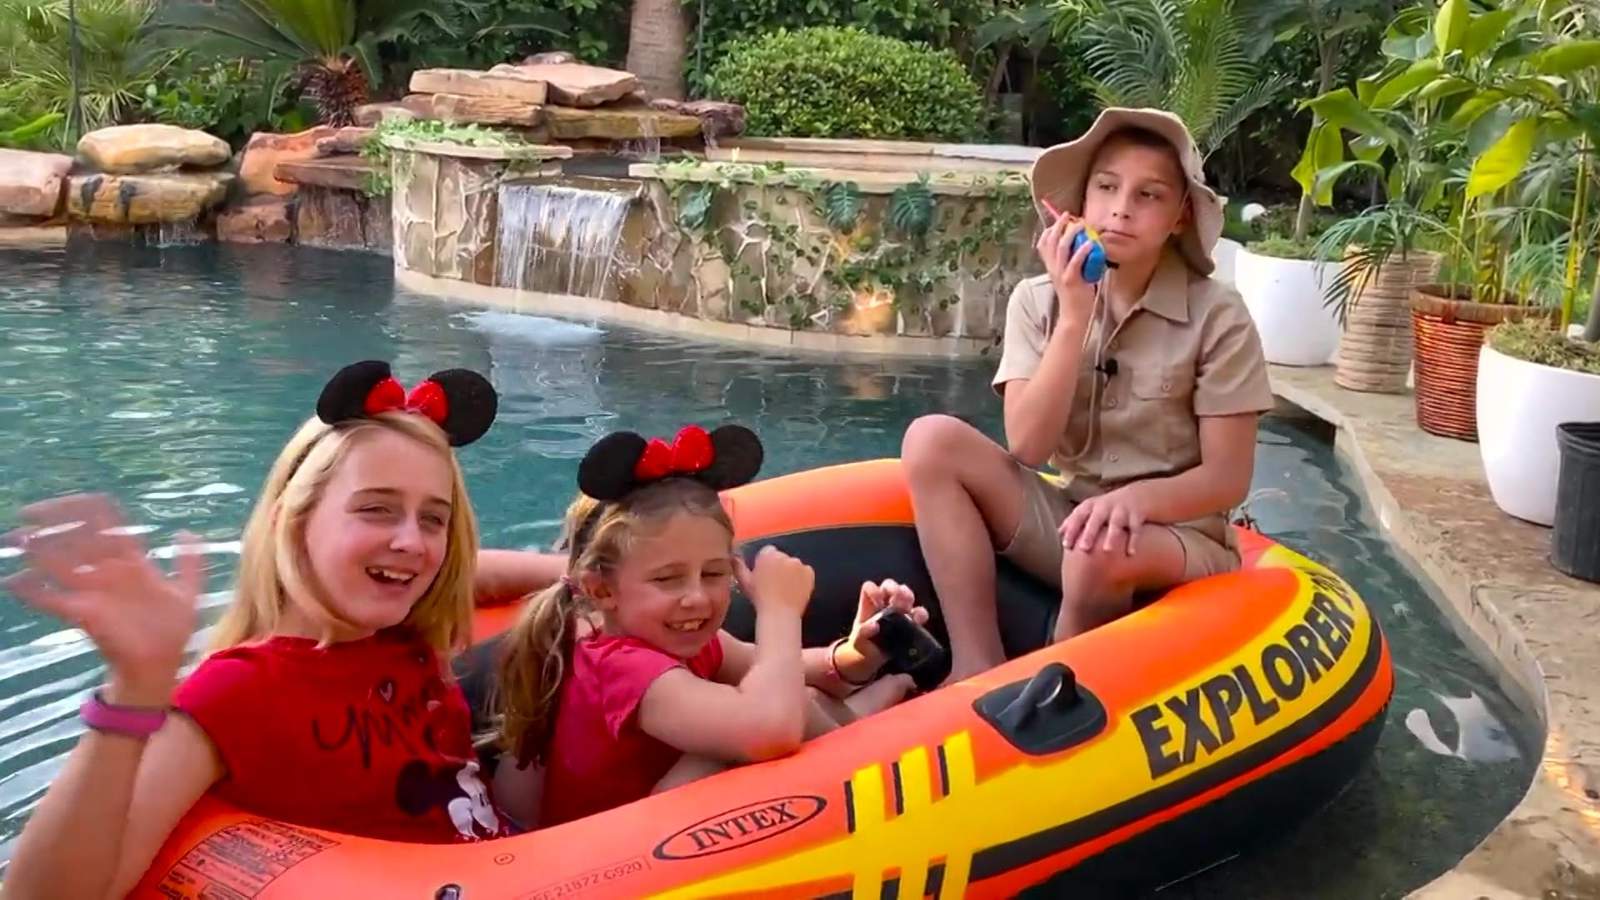 Katy family transforms backyard pool into a Disney jungle cruise in popular YouTube video